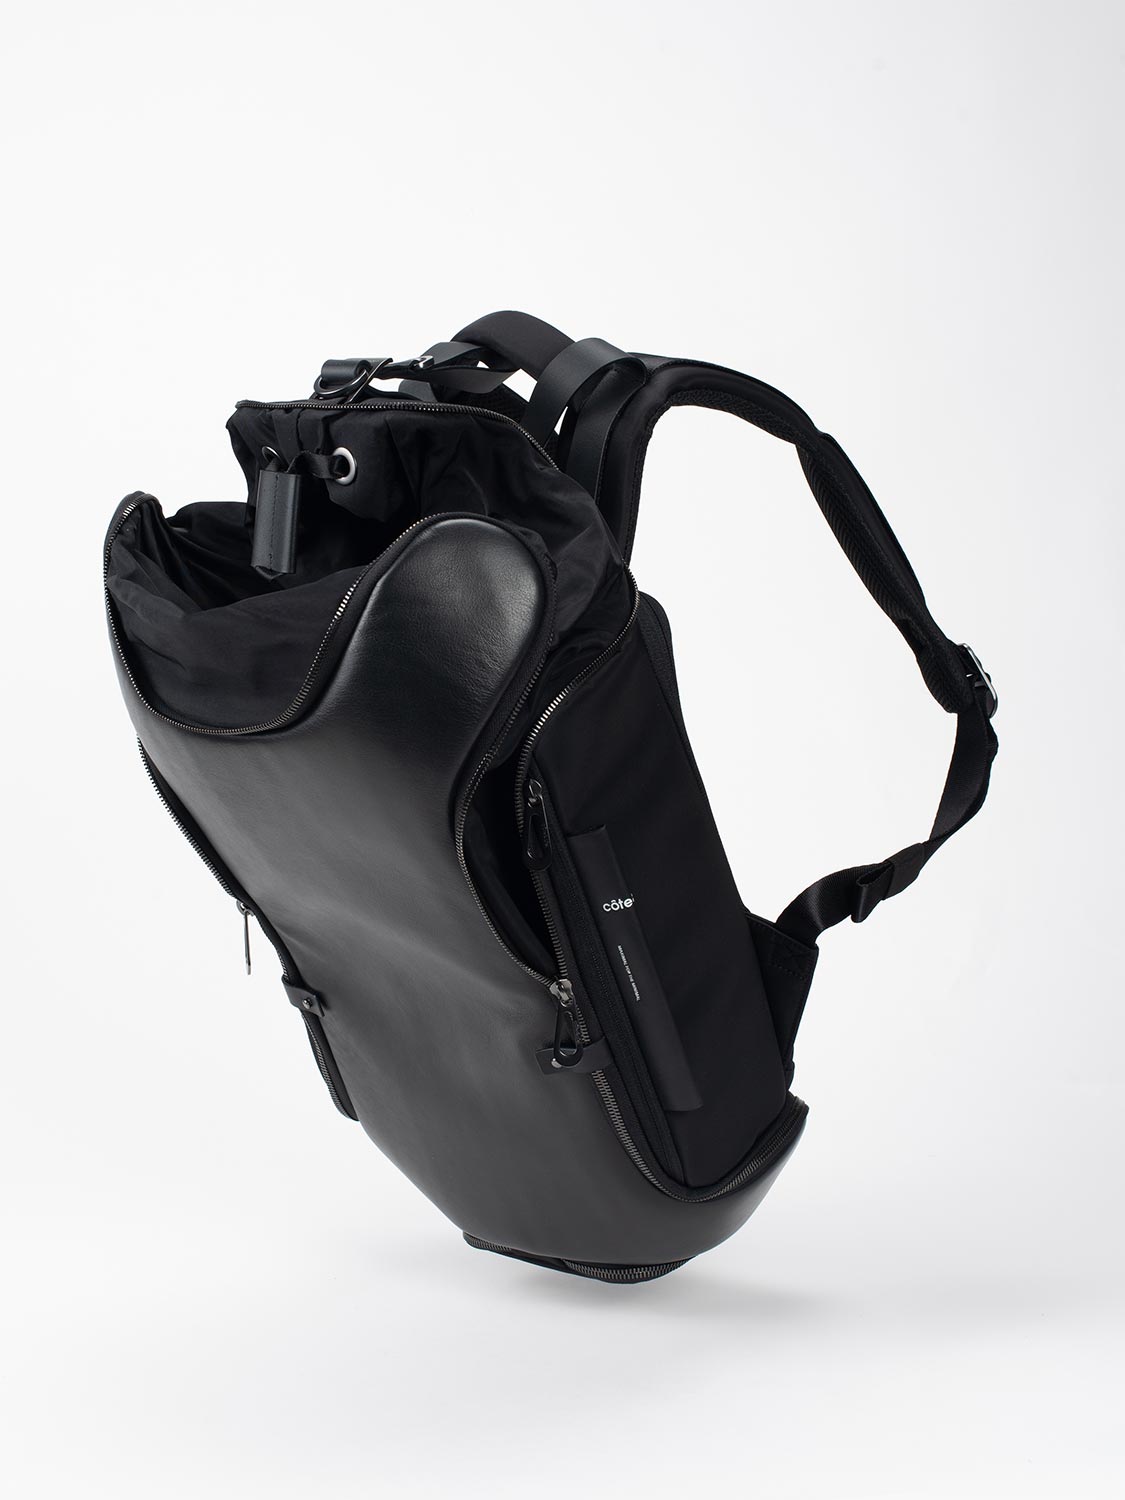 Avon Backpack Leather Black